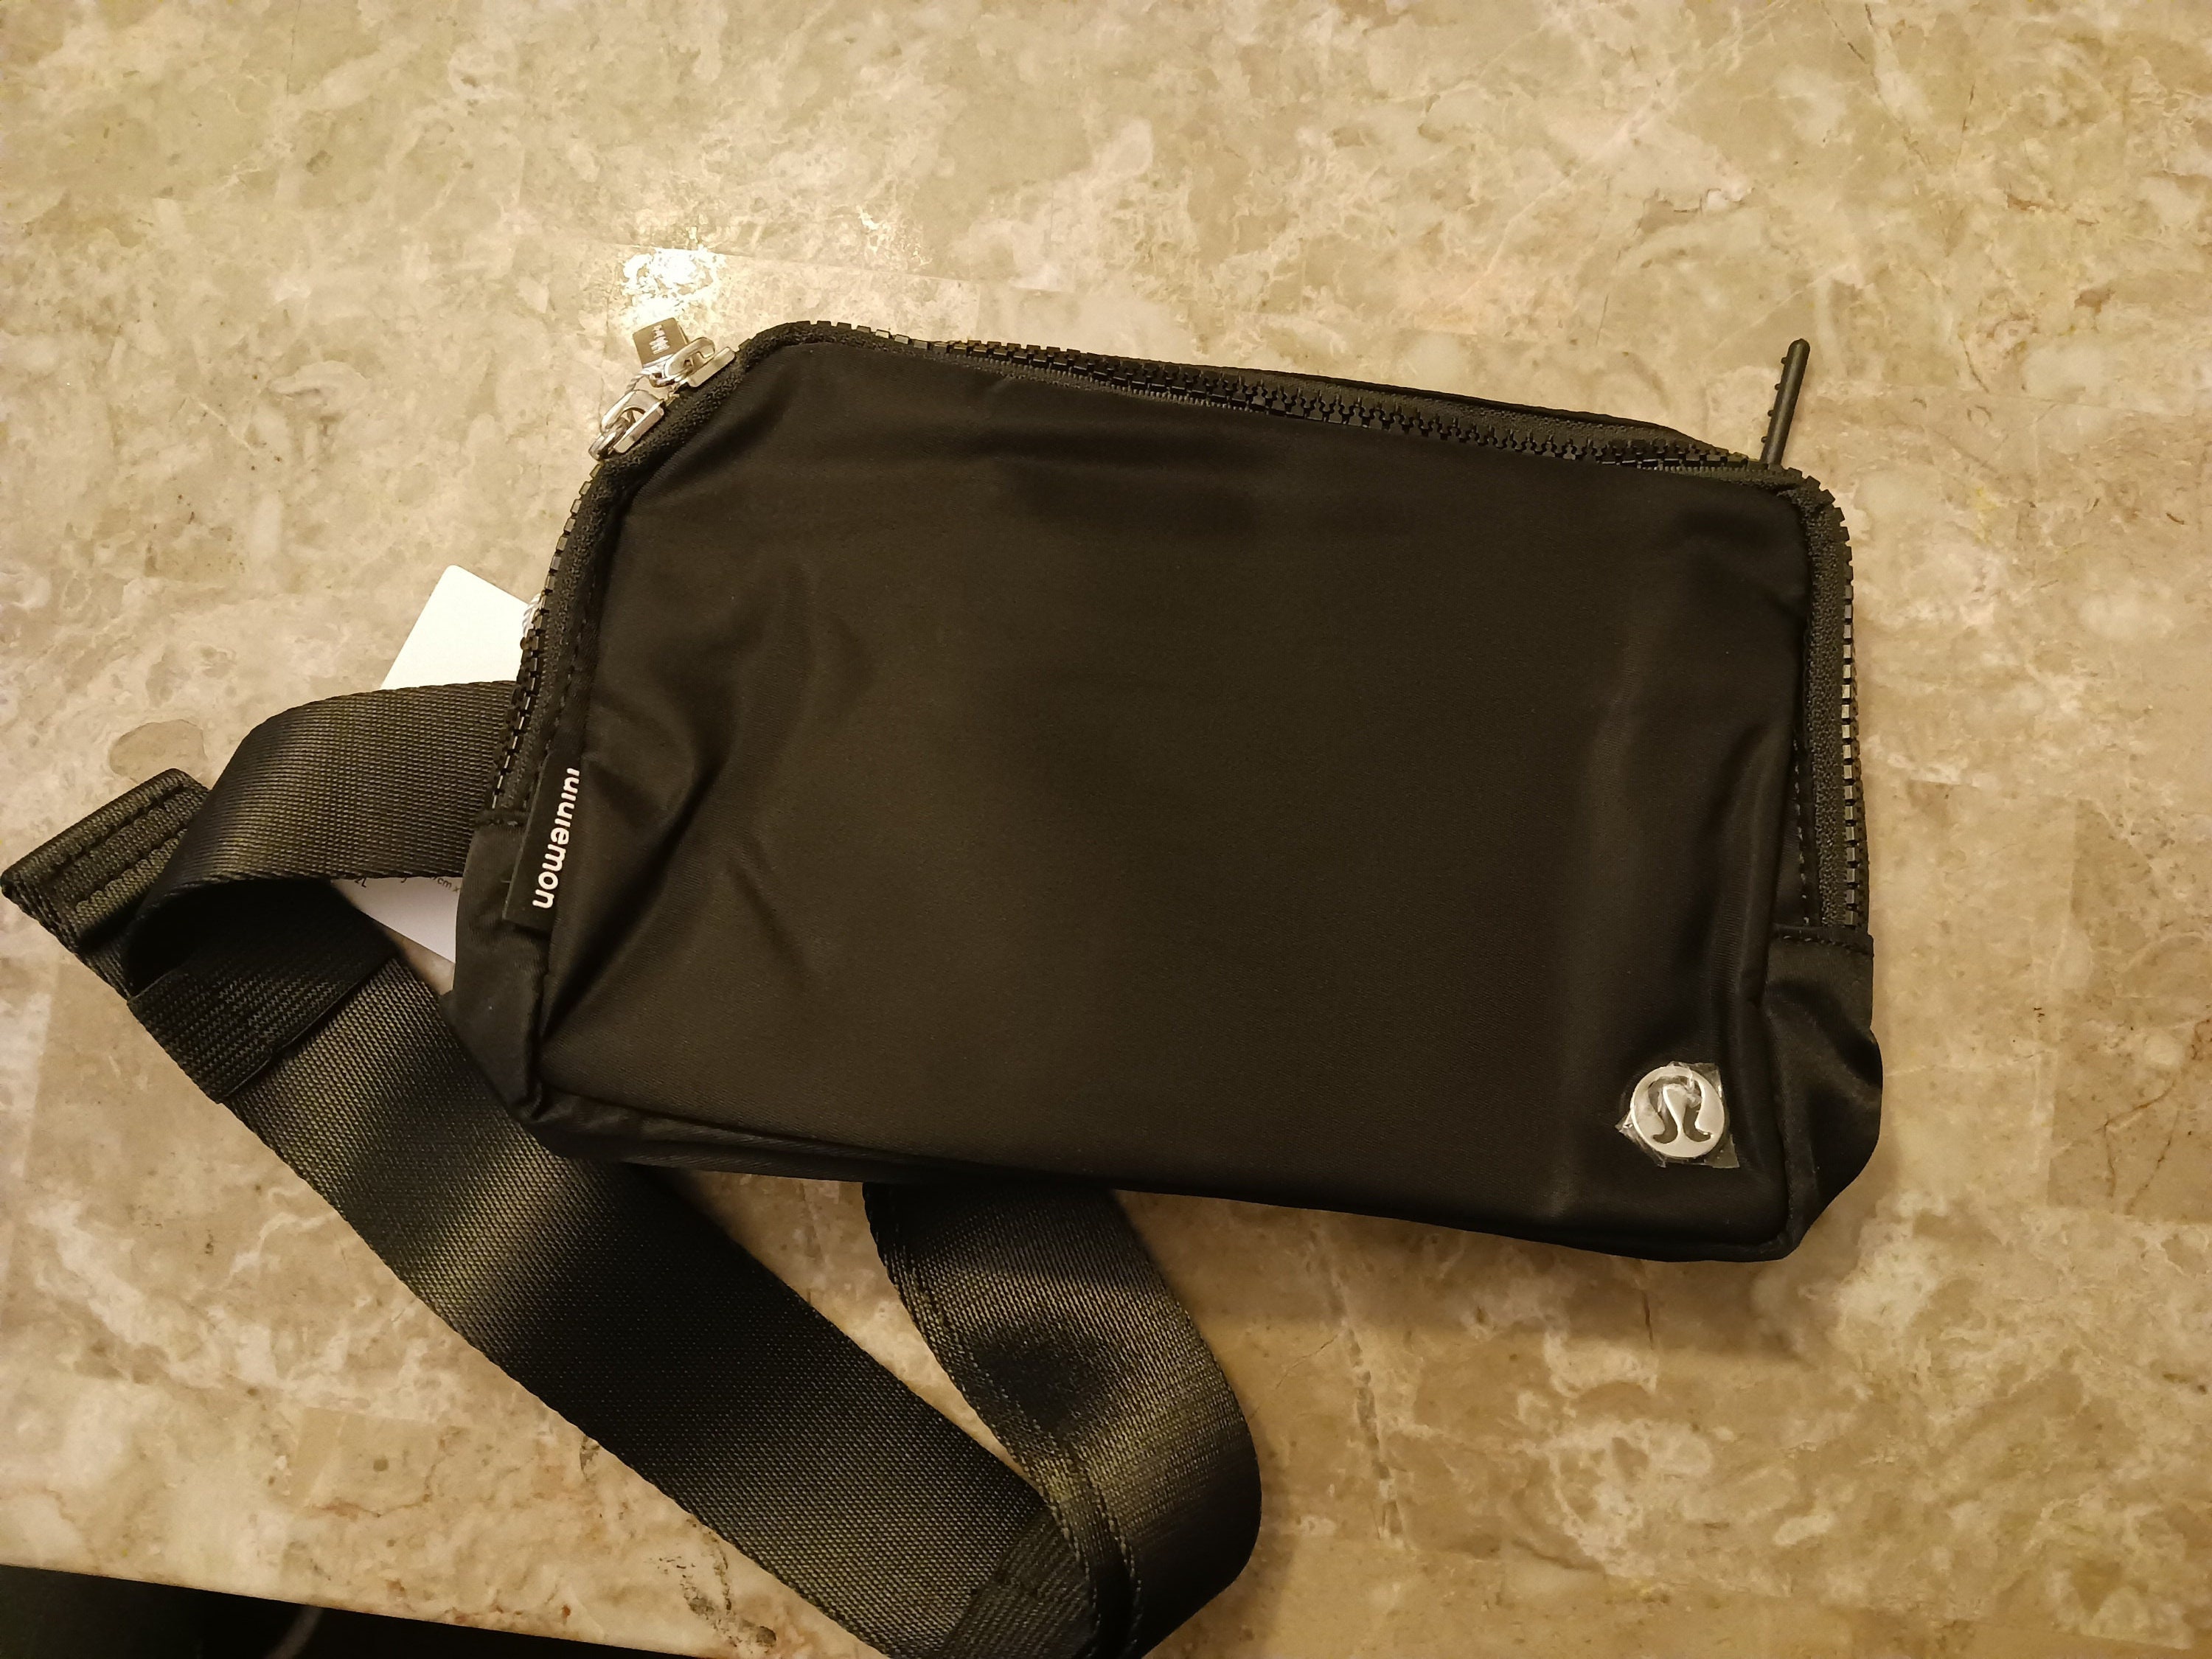 Lululemon Everywhere Belt Bag Large 2L - Black/Neutral